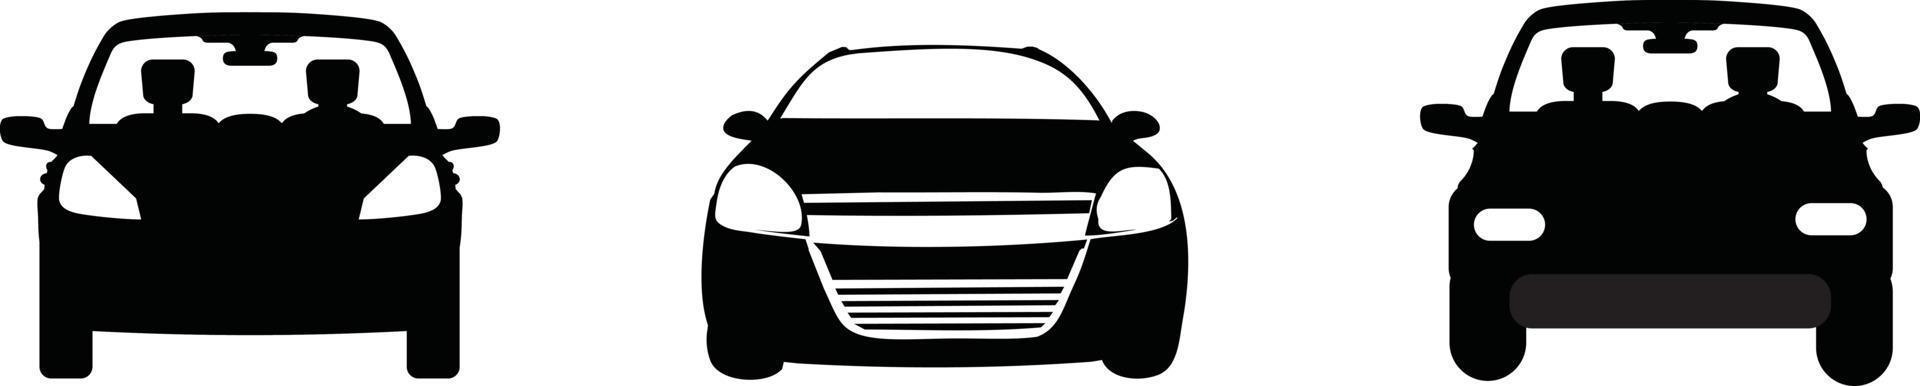 Auto-Symbol. Auto-Fahrzeug isoliert. Transportsymbole. Automobil-Silhouette-Vorderansicht. Limousinen-, Fahrzeug- oder Automobilsymbol auf weißem Hintergrund, Vektorgrafik vektor